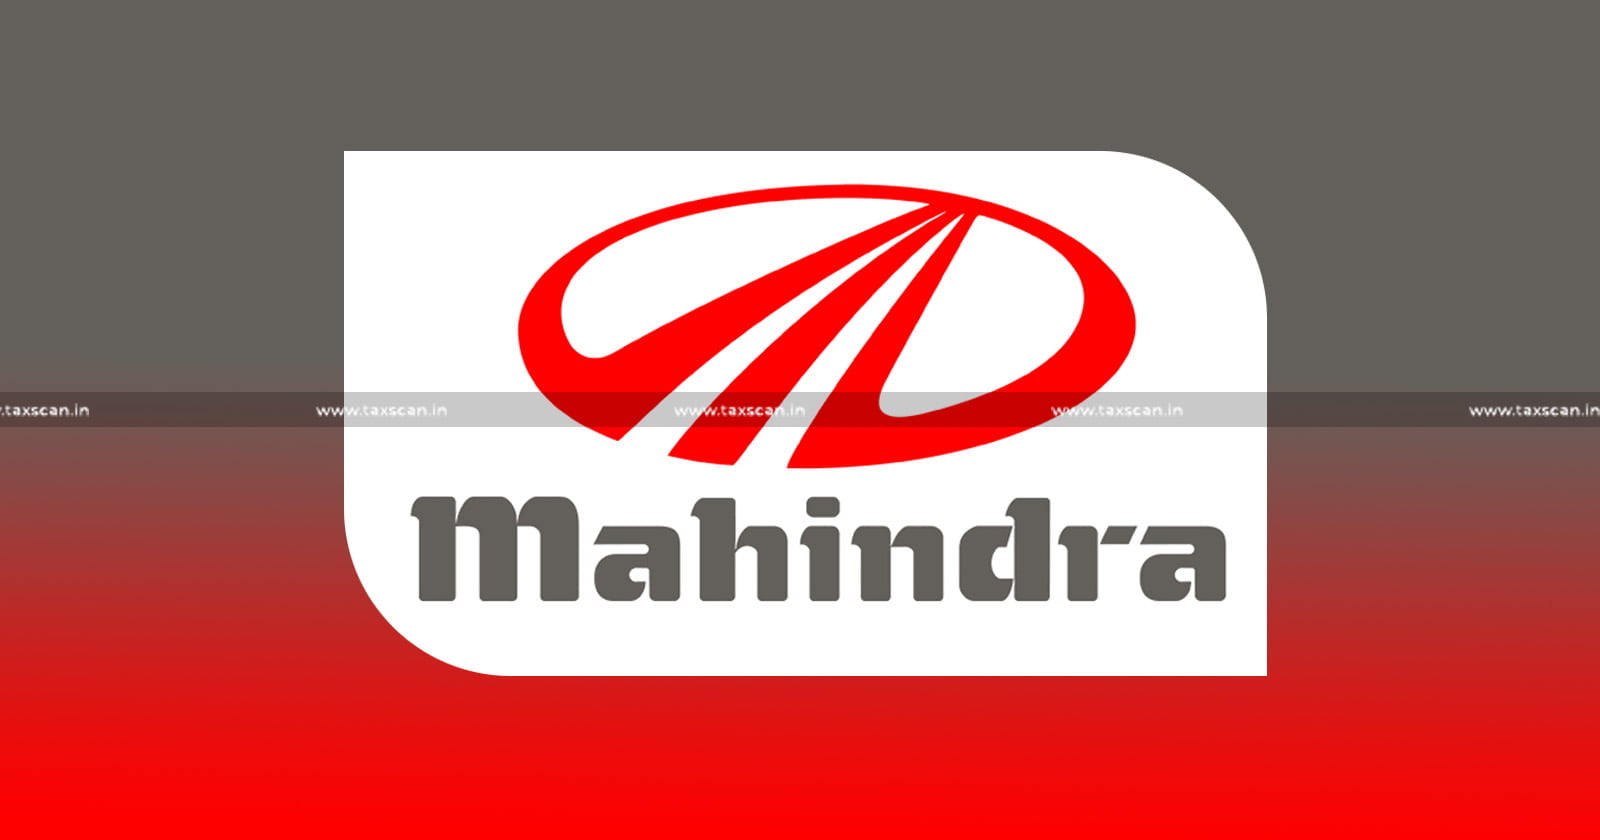 Vacancy in Mahindra - job vacancy in Mahindra - job in Mahindra - TAXSCAN